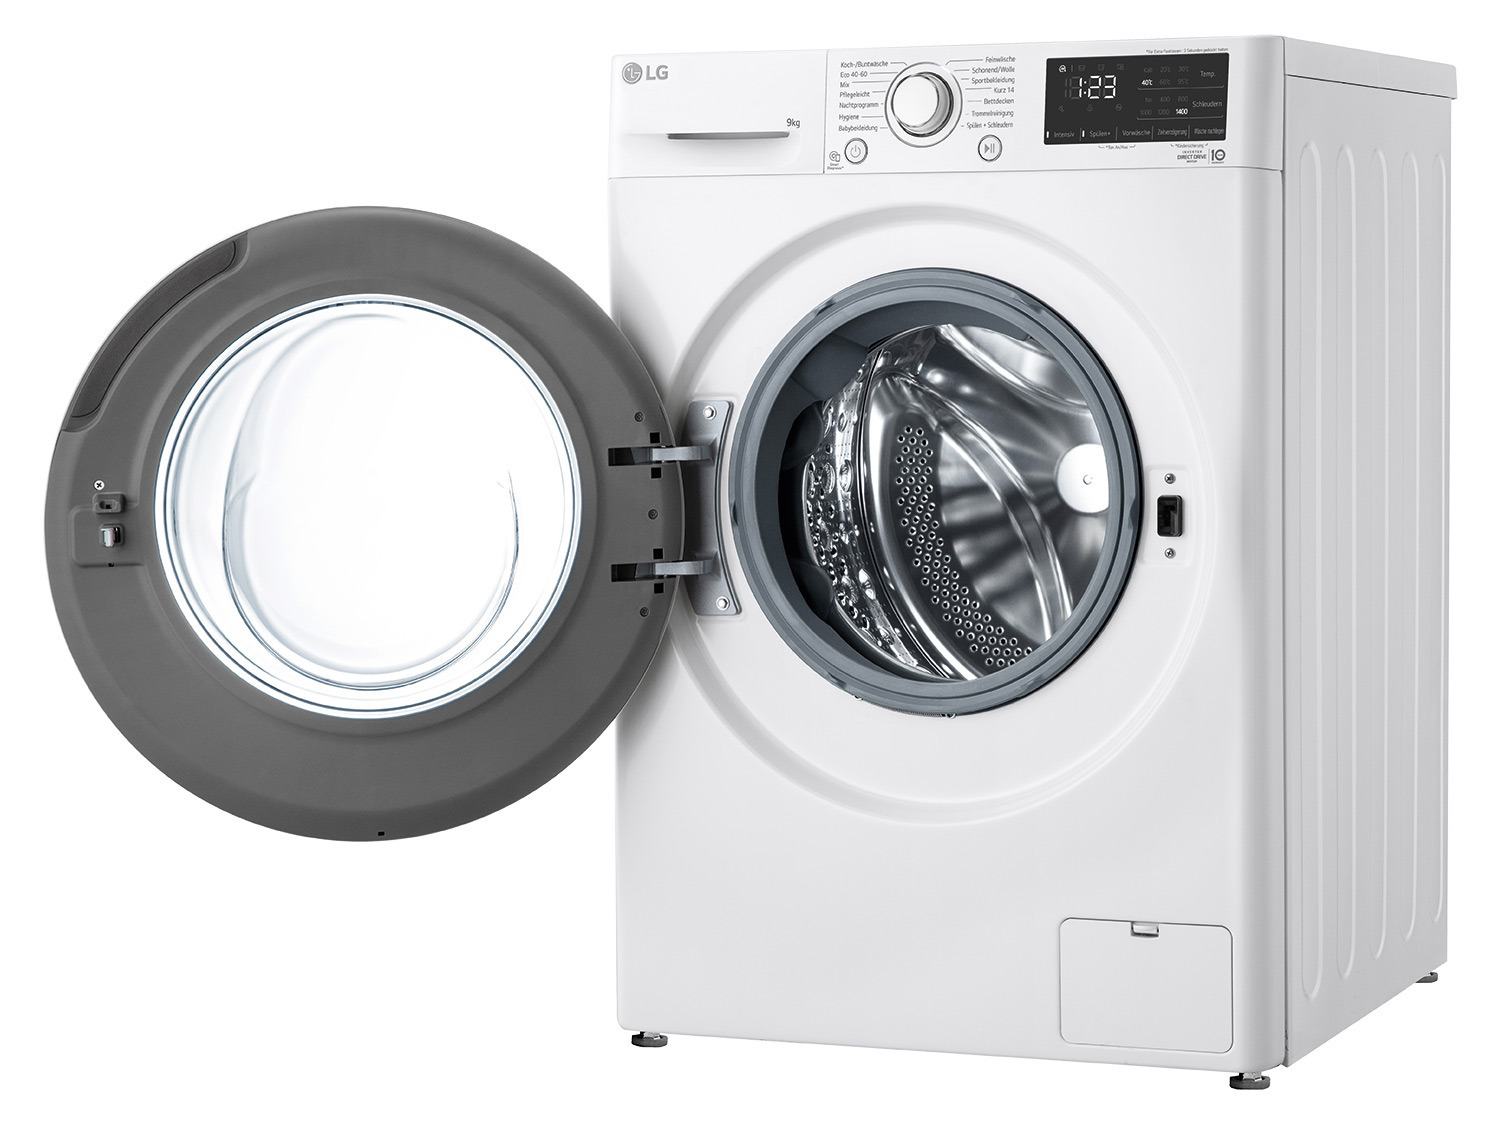 LG Waschmaschine »F4NV3193«, 1360 U/min, 9kg | LIDL